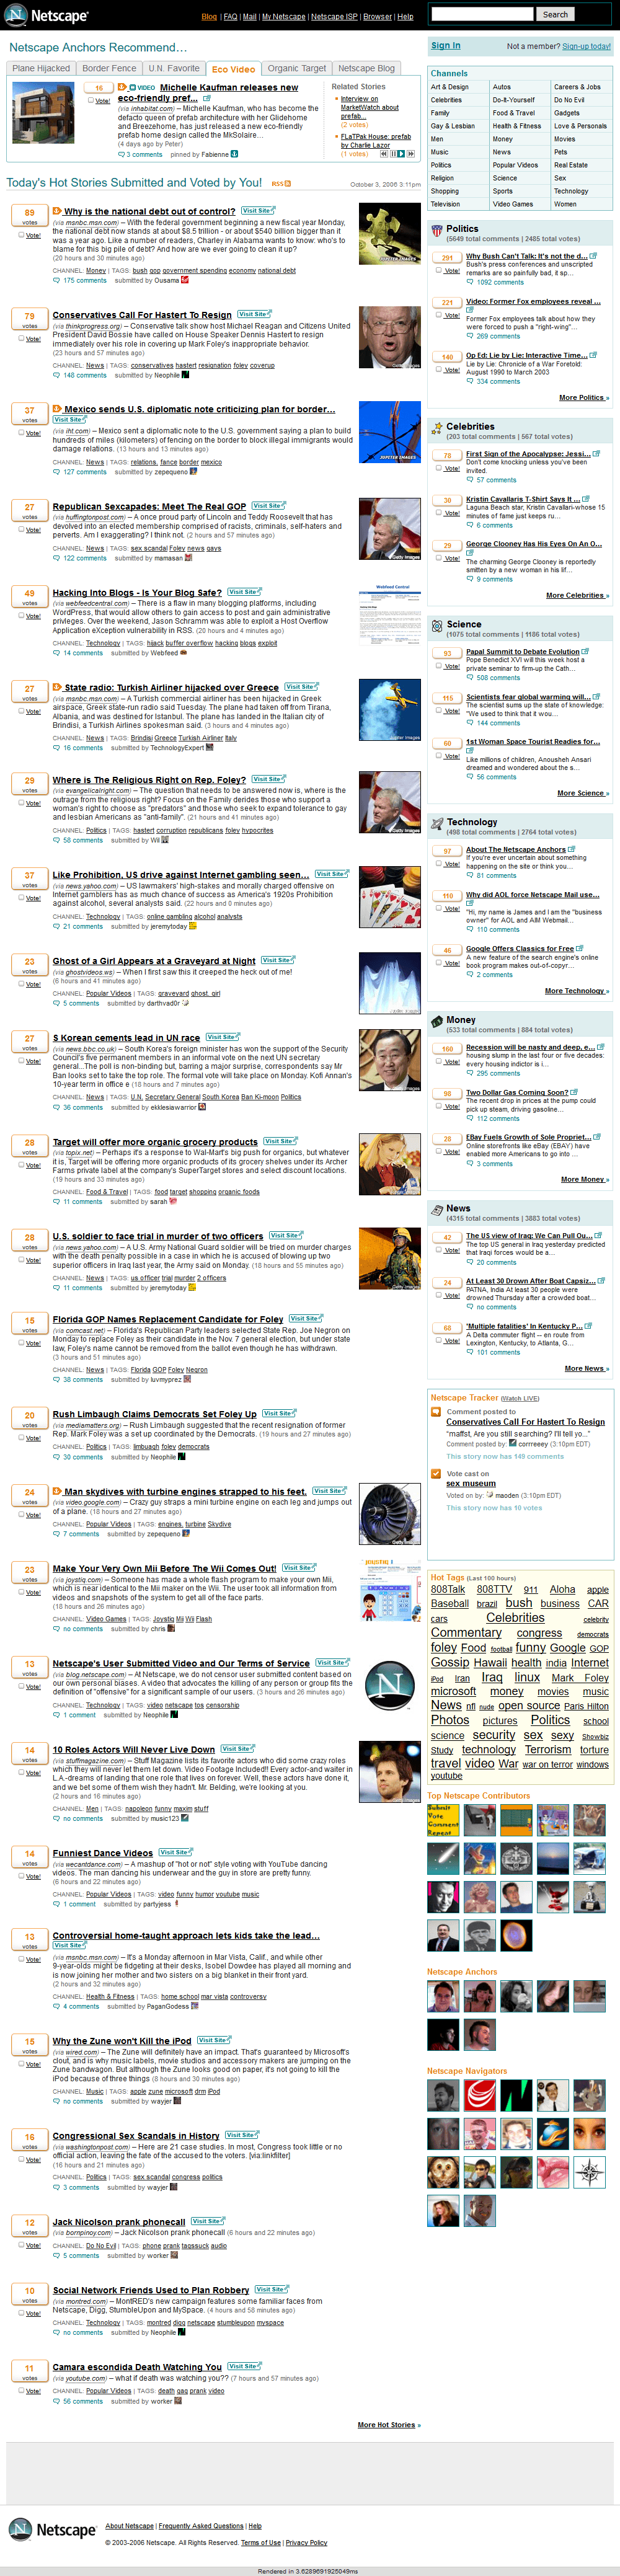 Netscape in 2006 timeline | Web Design Museum